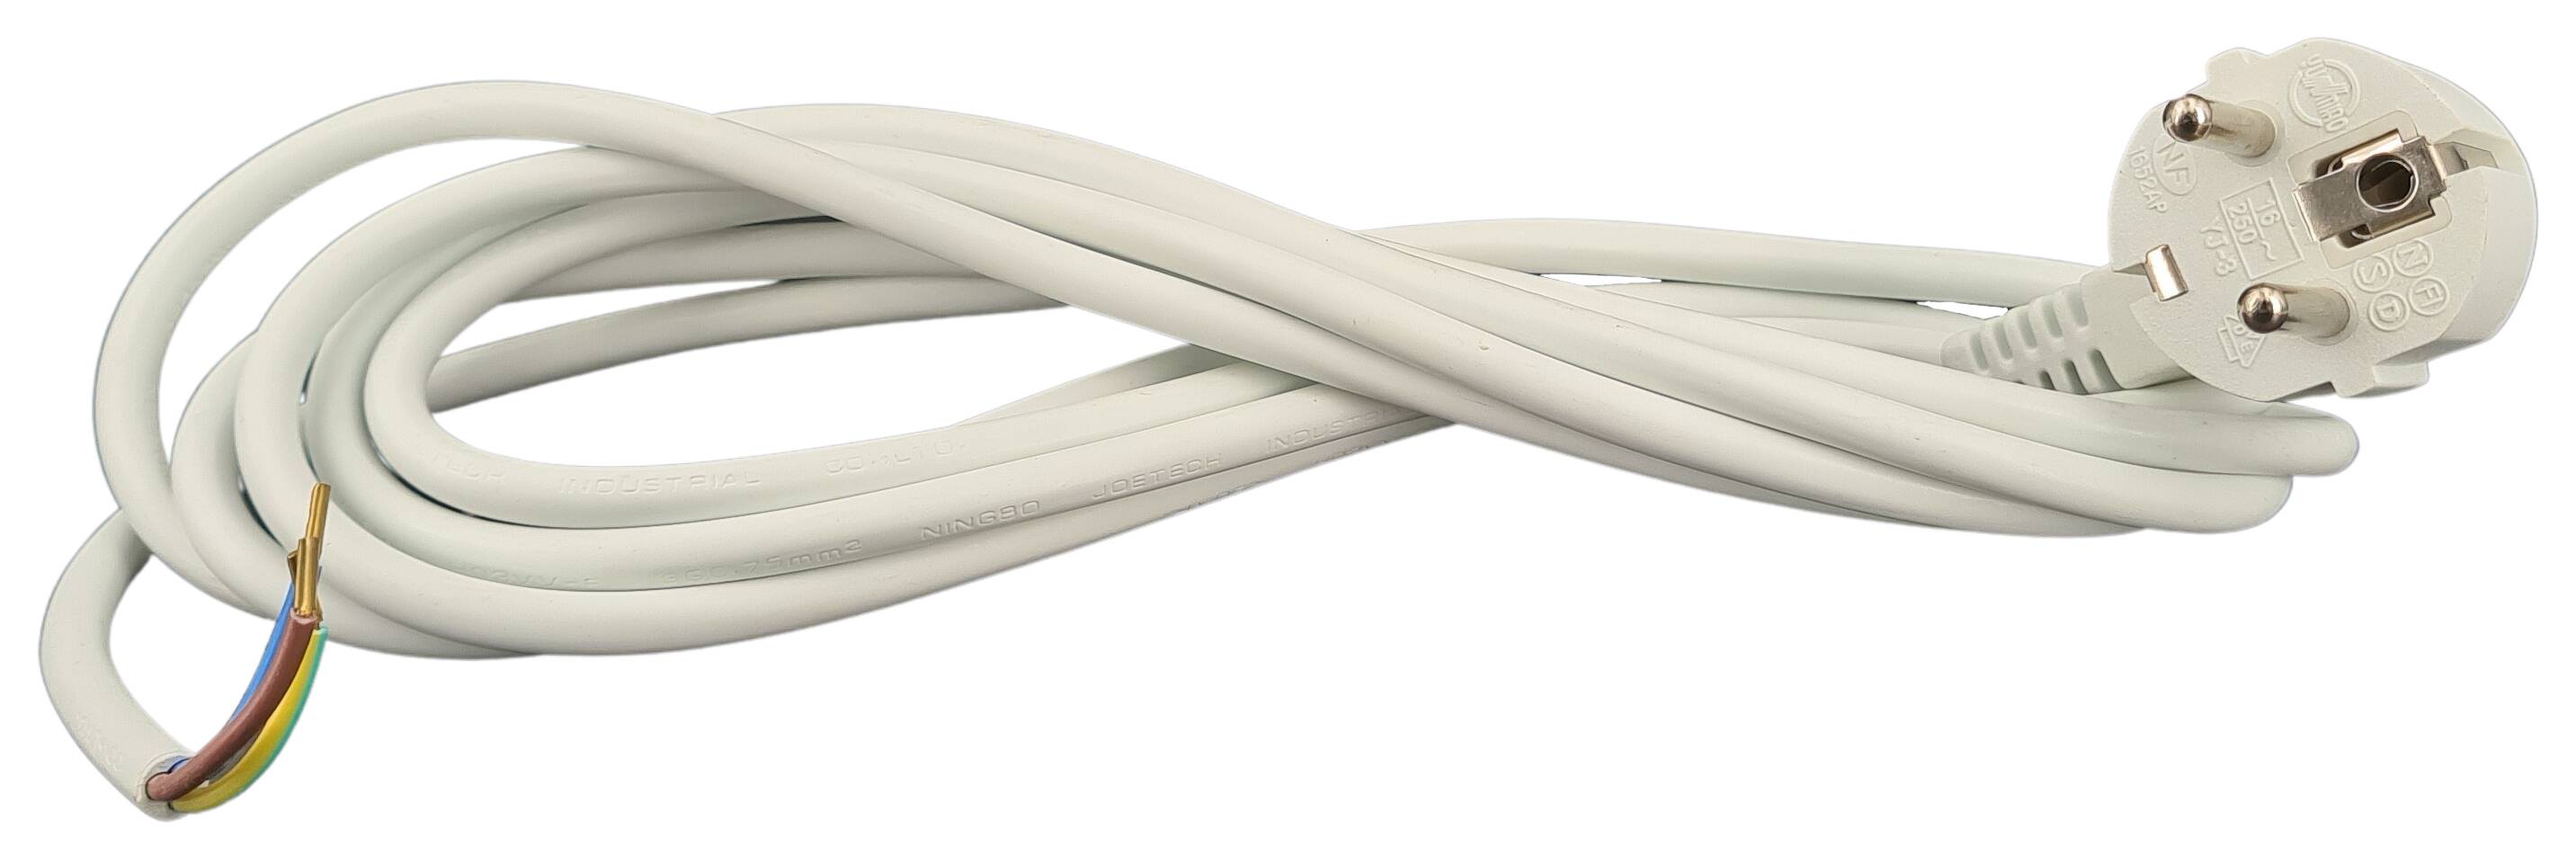 cord-set 3G 0,75/1500 with schuko angled plug white